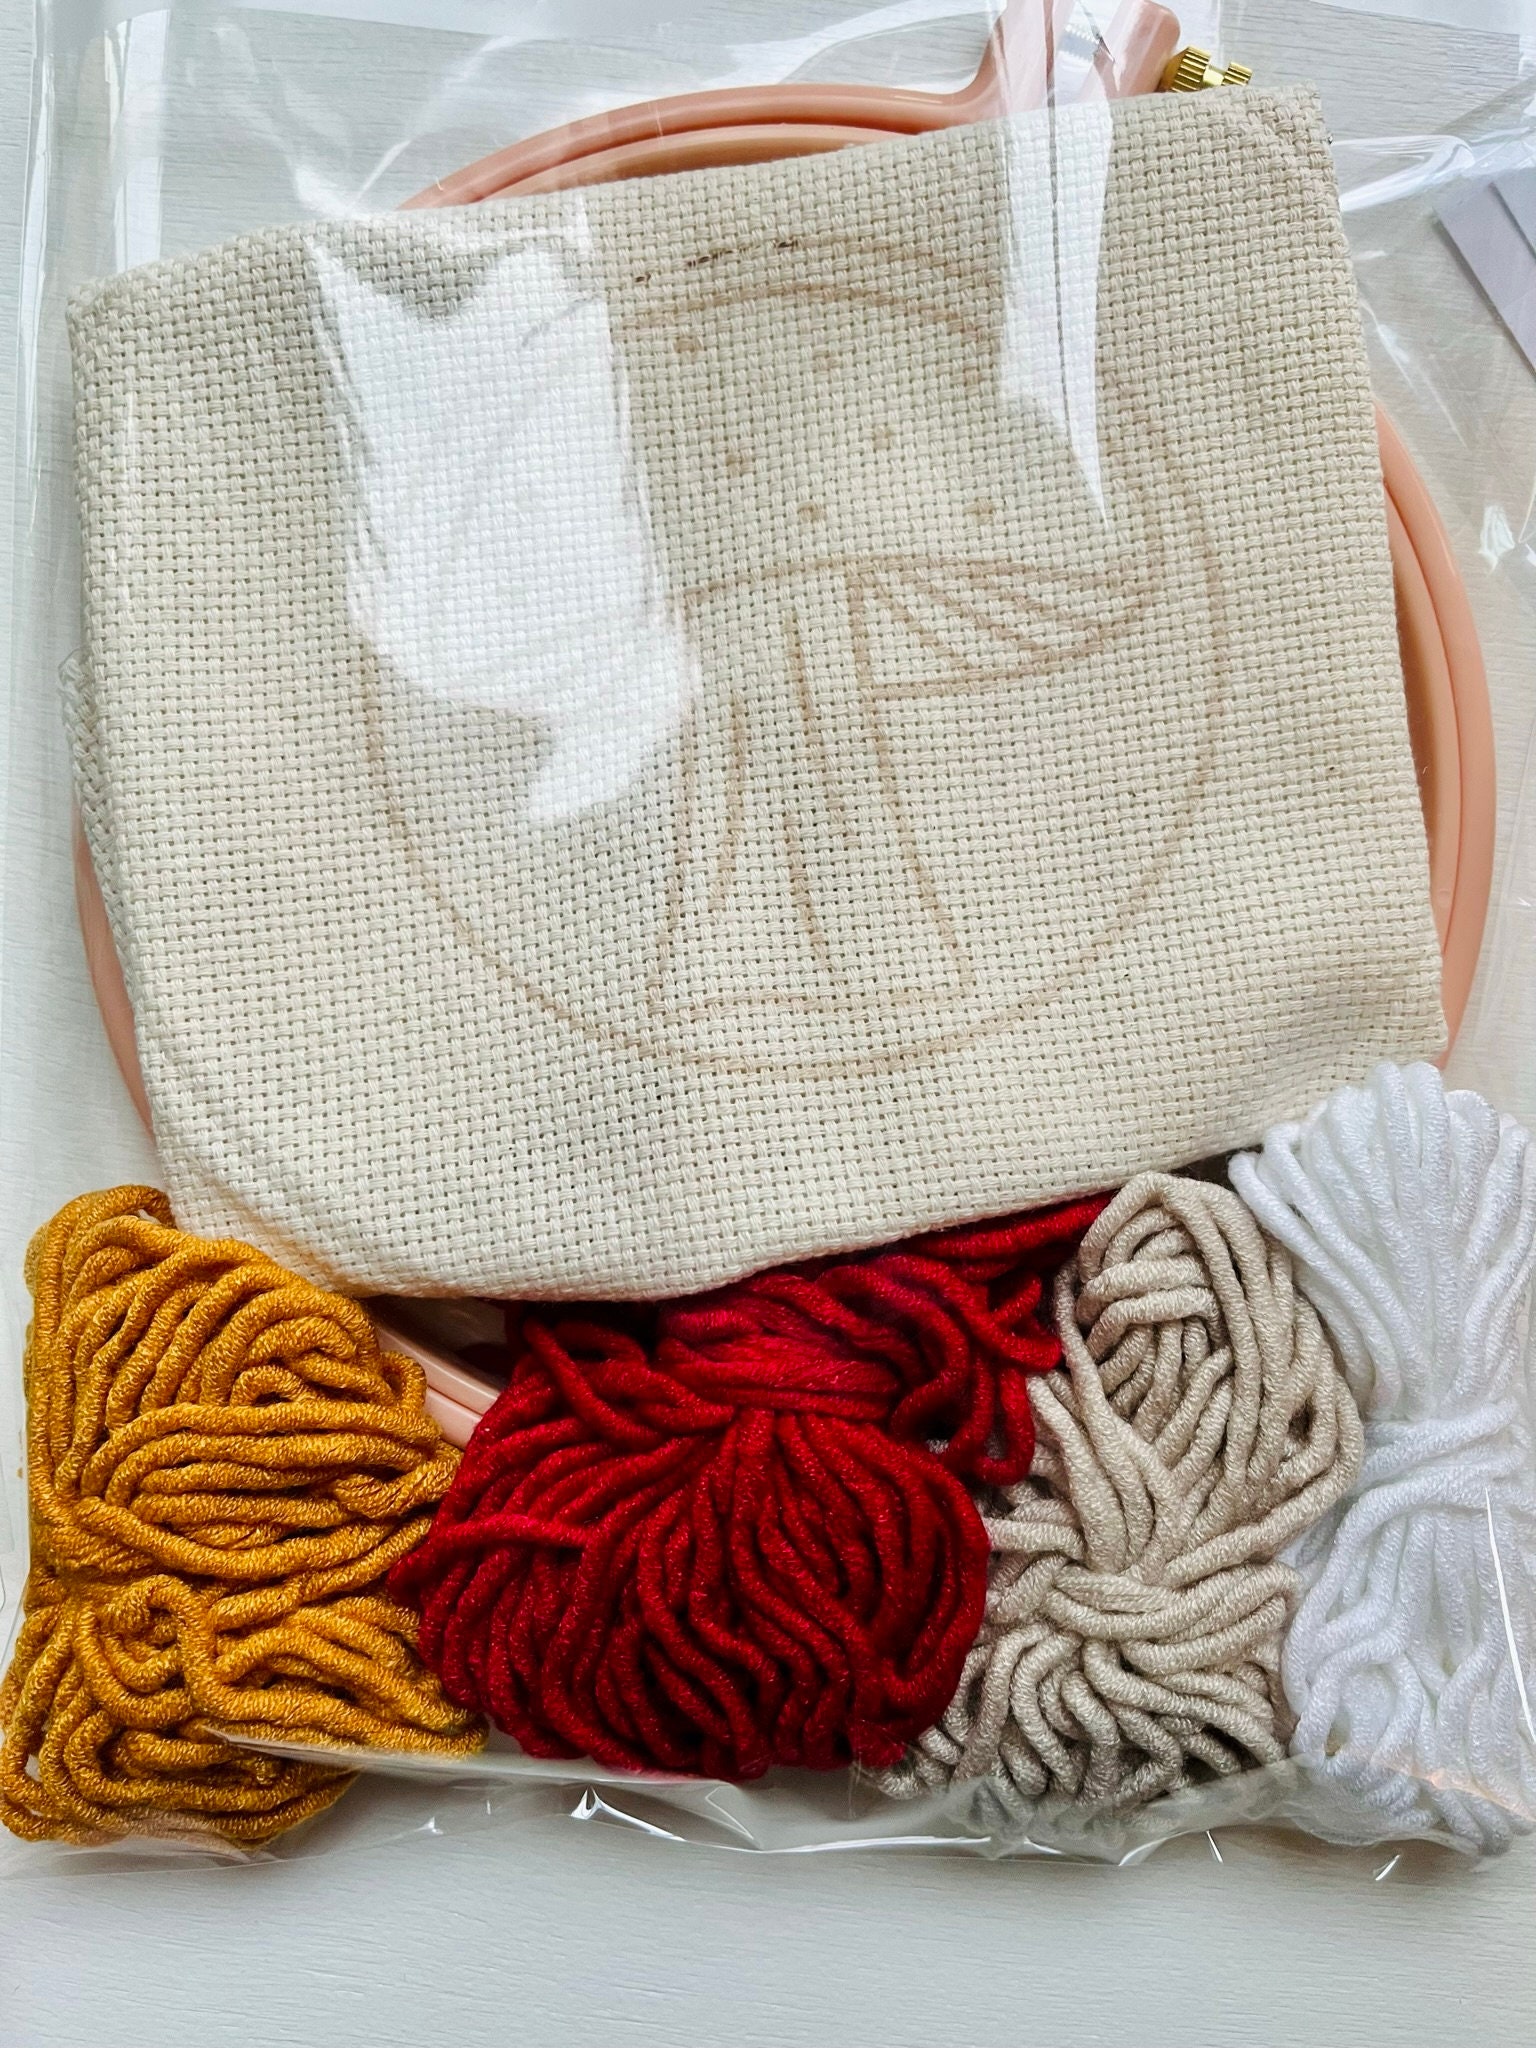 DIY punch needle kit, mushroom, craft kit, crafty gift, rug hooking